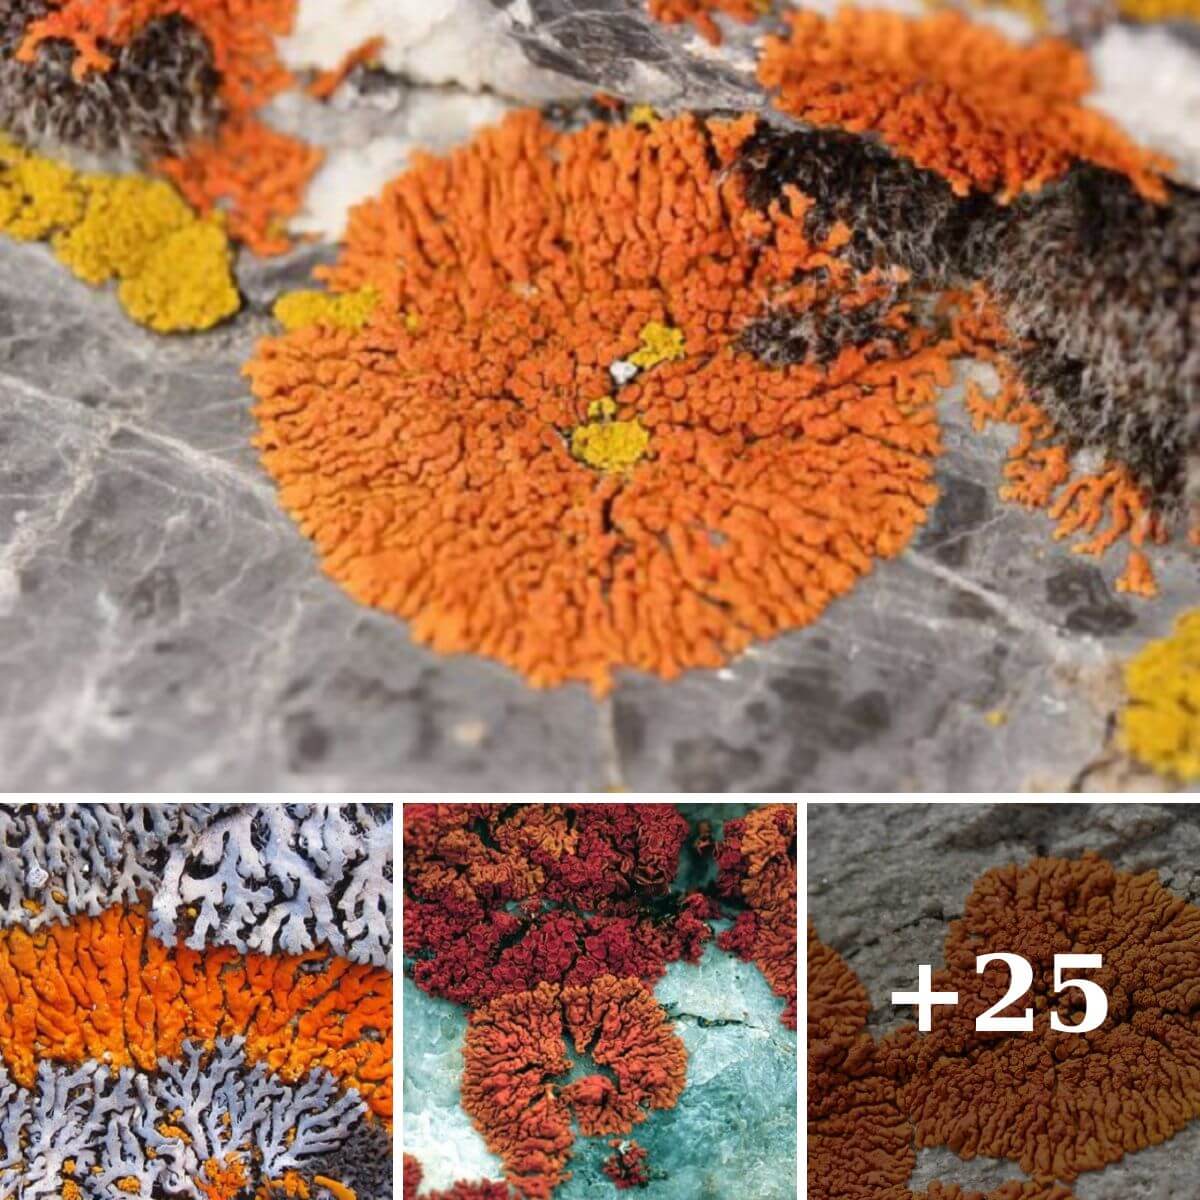 Discovering the Elegance of Sunburst Lichen (Xanthoria elegans)